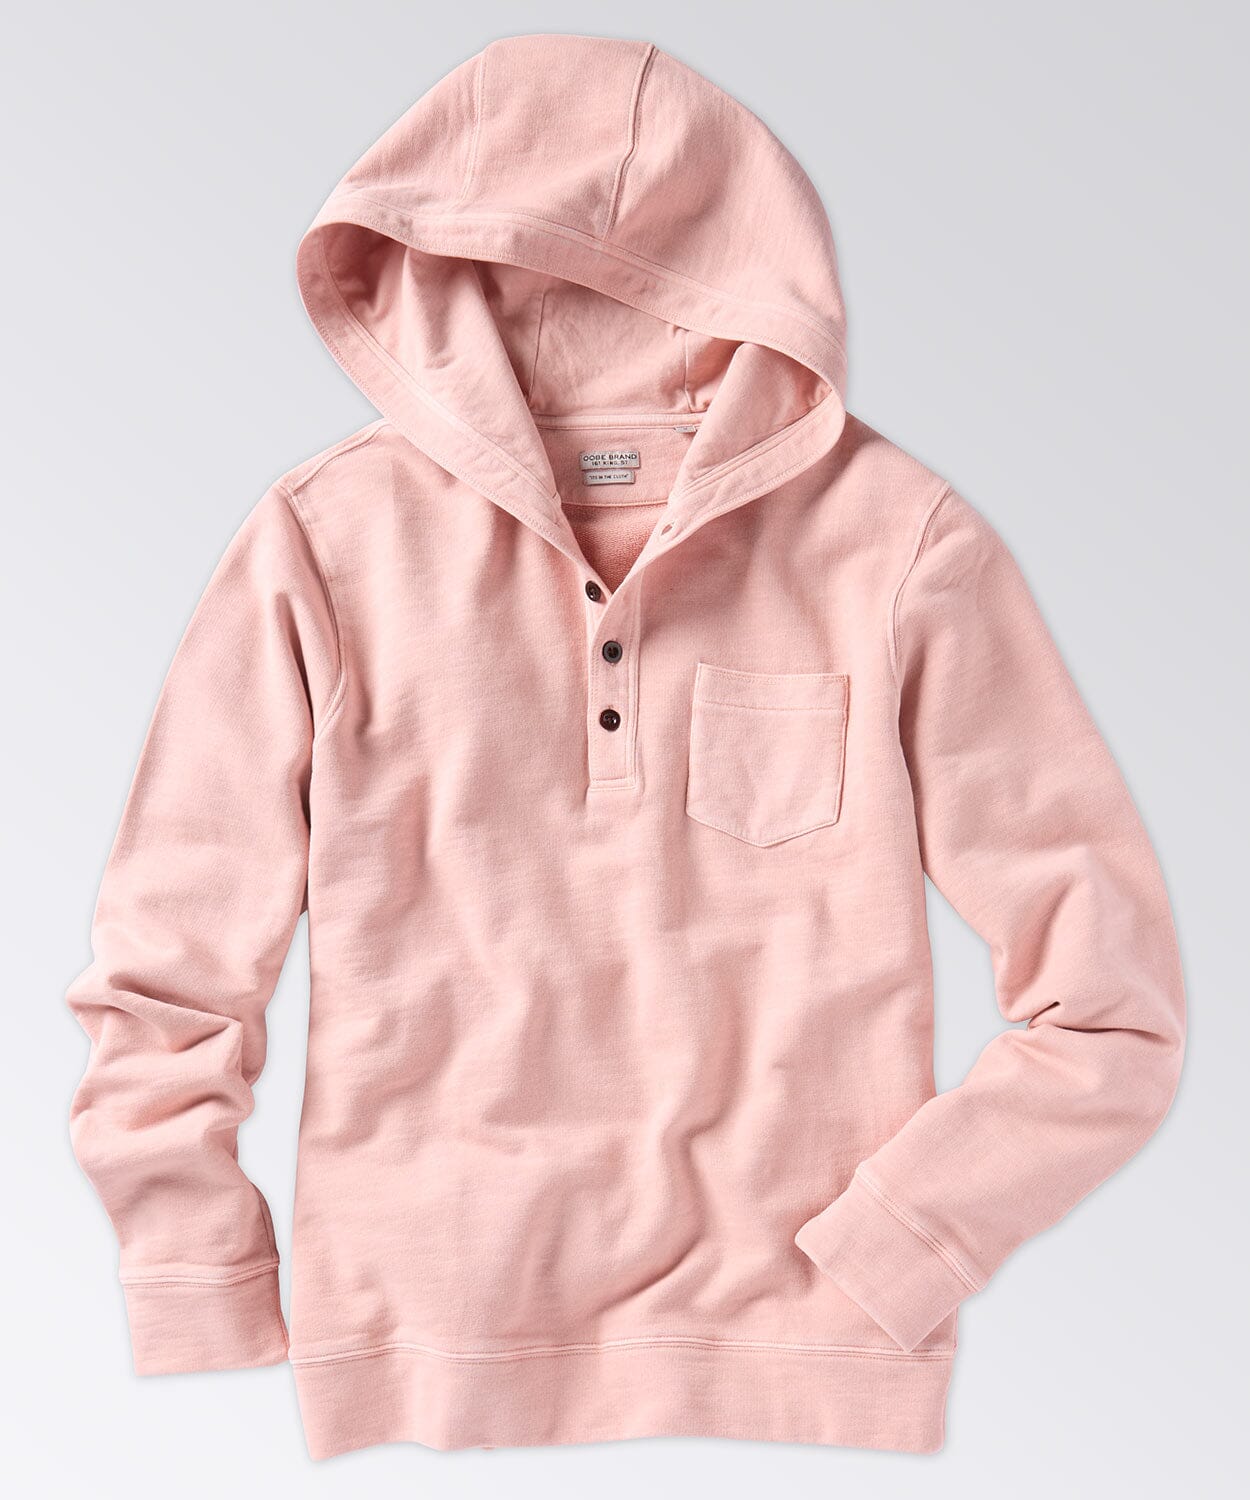 Pink brand sweater